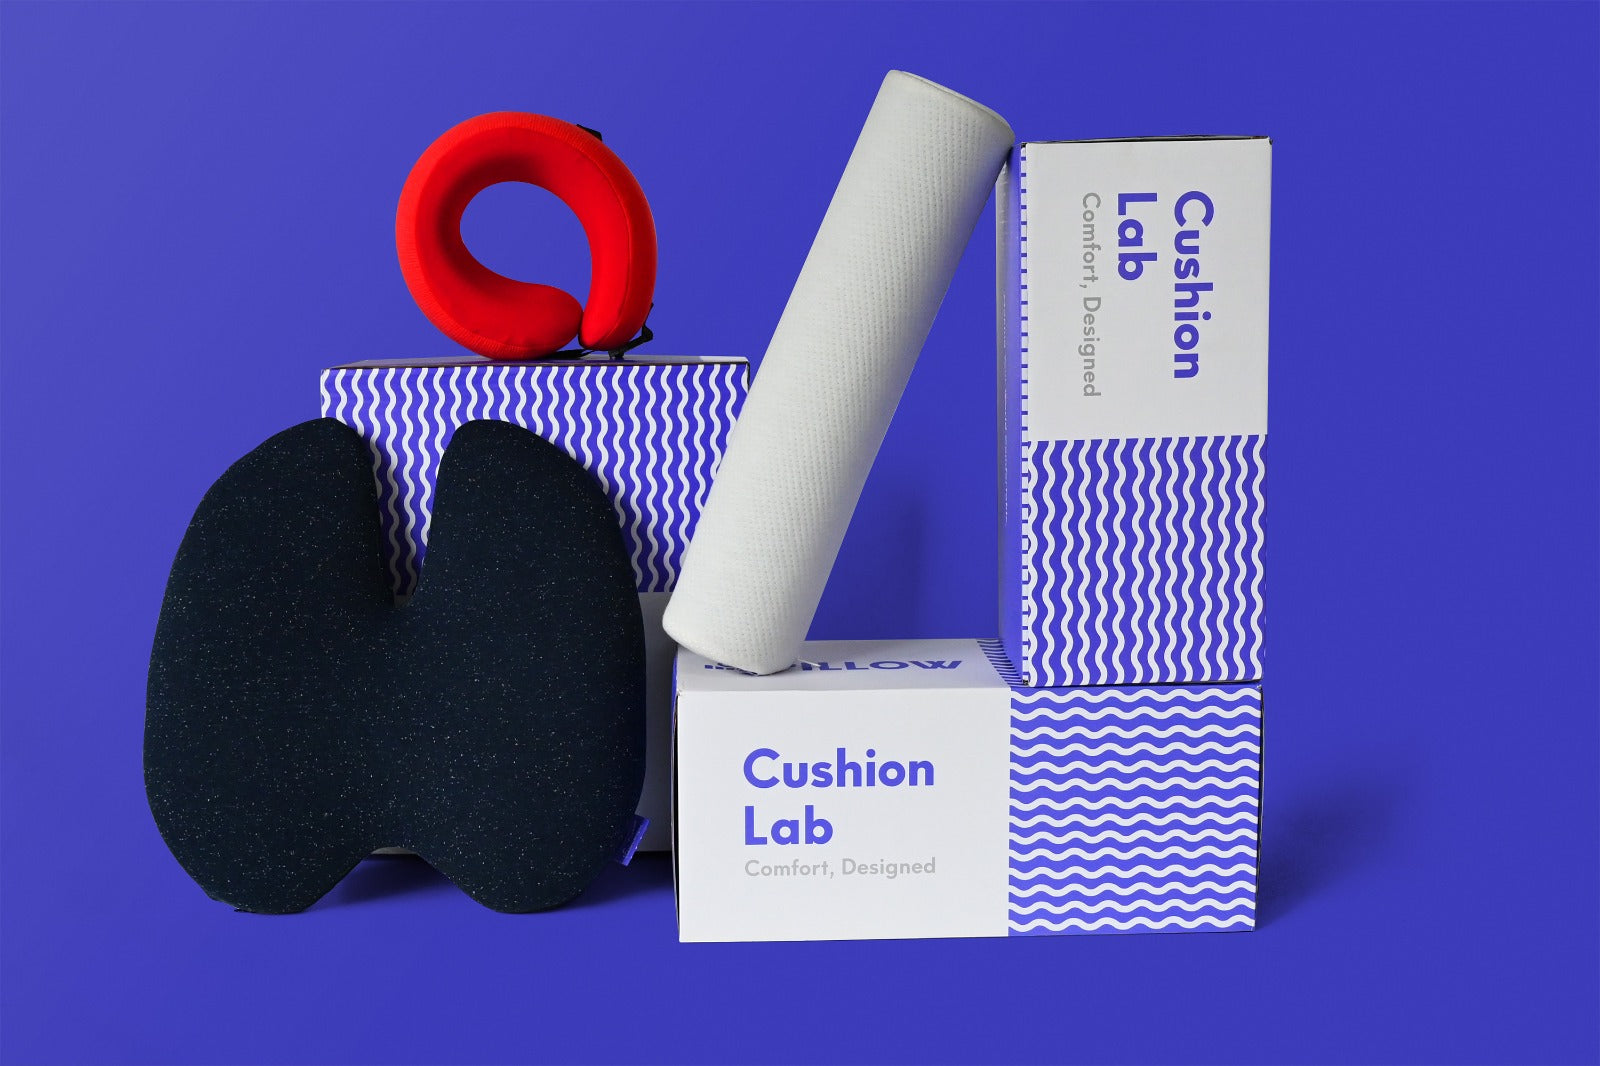 Cushion Lab Product & Service FAQs